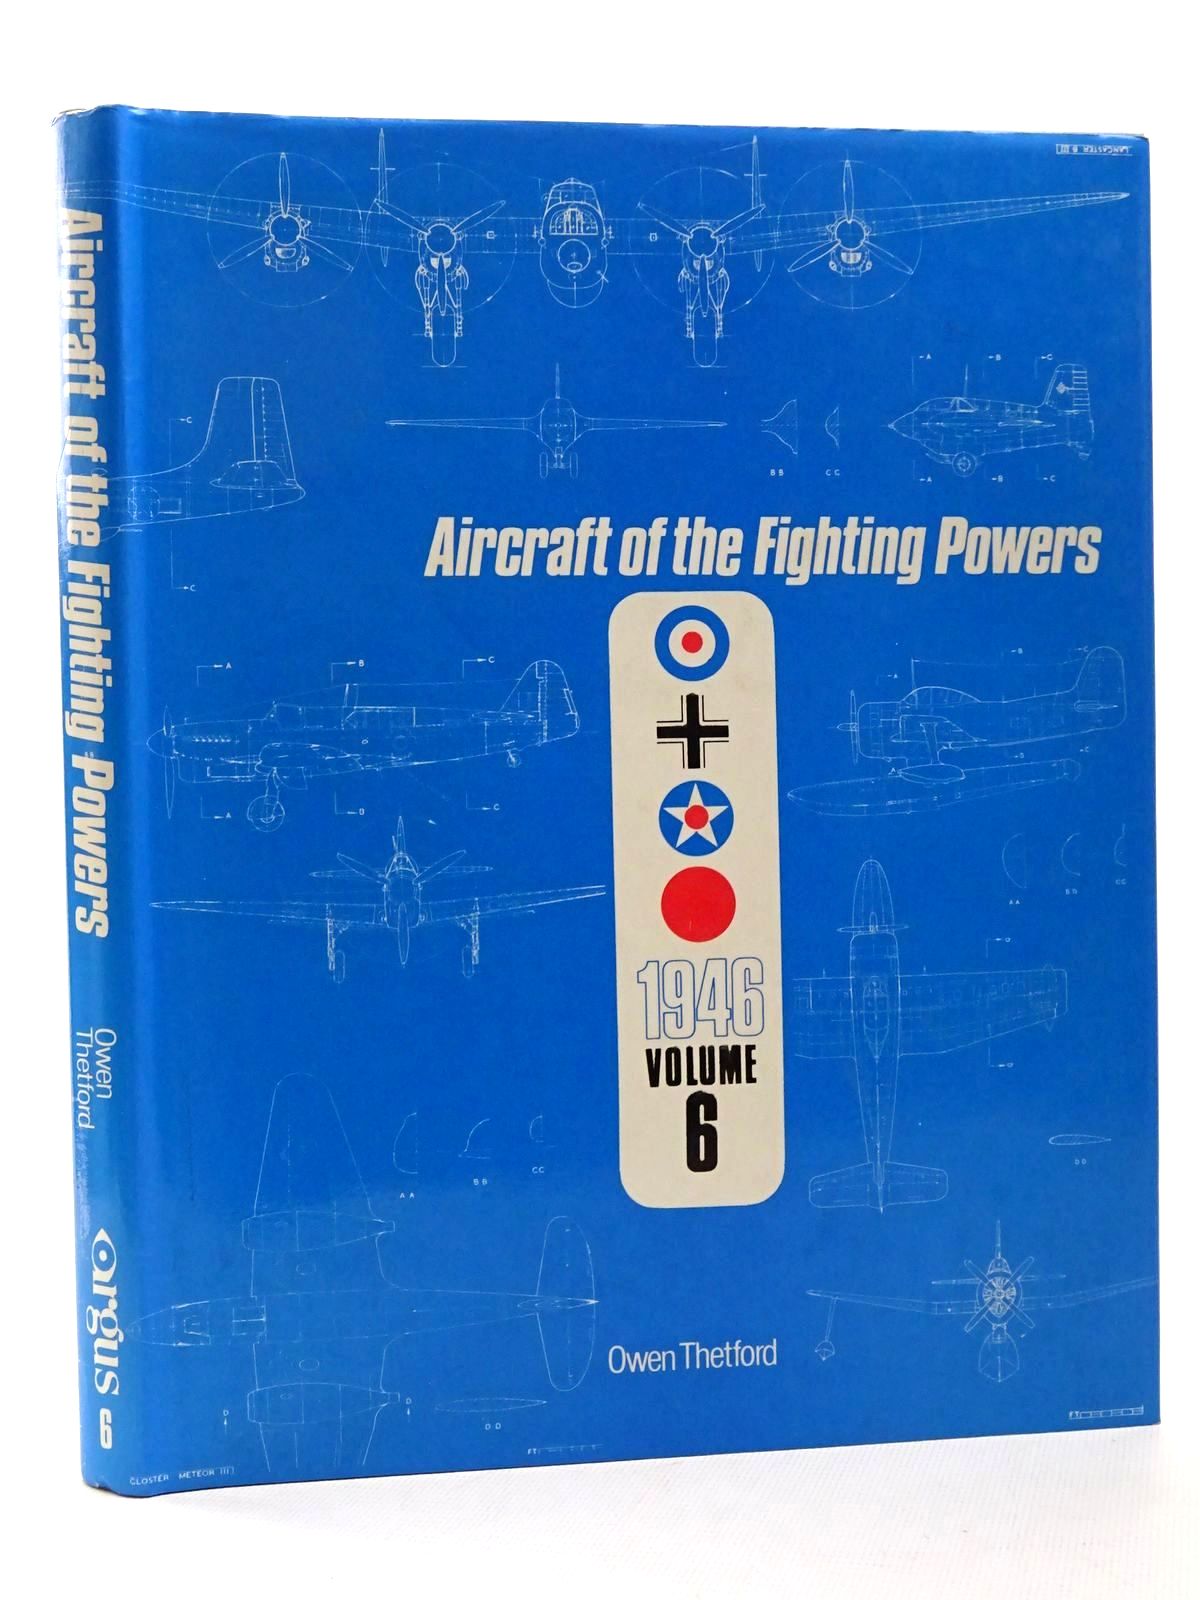 THETFORD, OWEN G. - Aircraft of the Fighting Powers Vol Vi